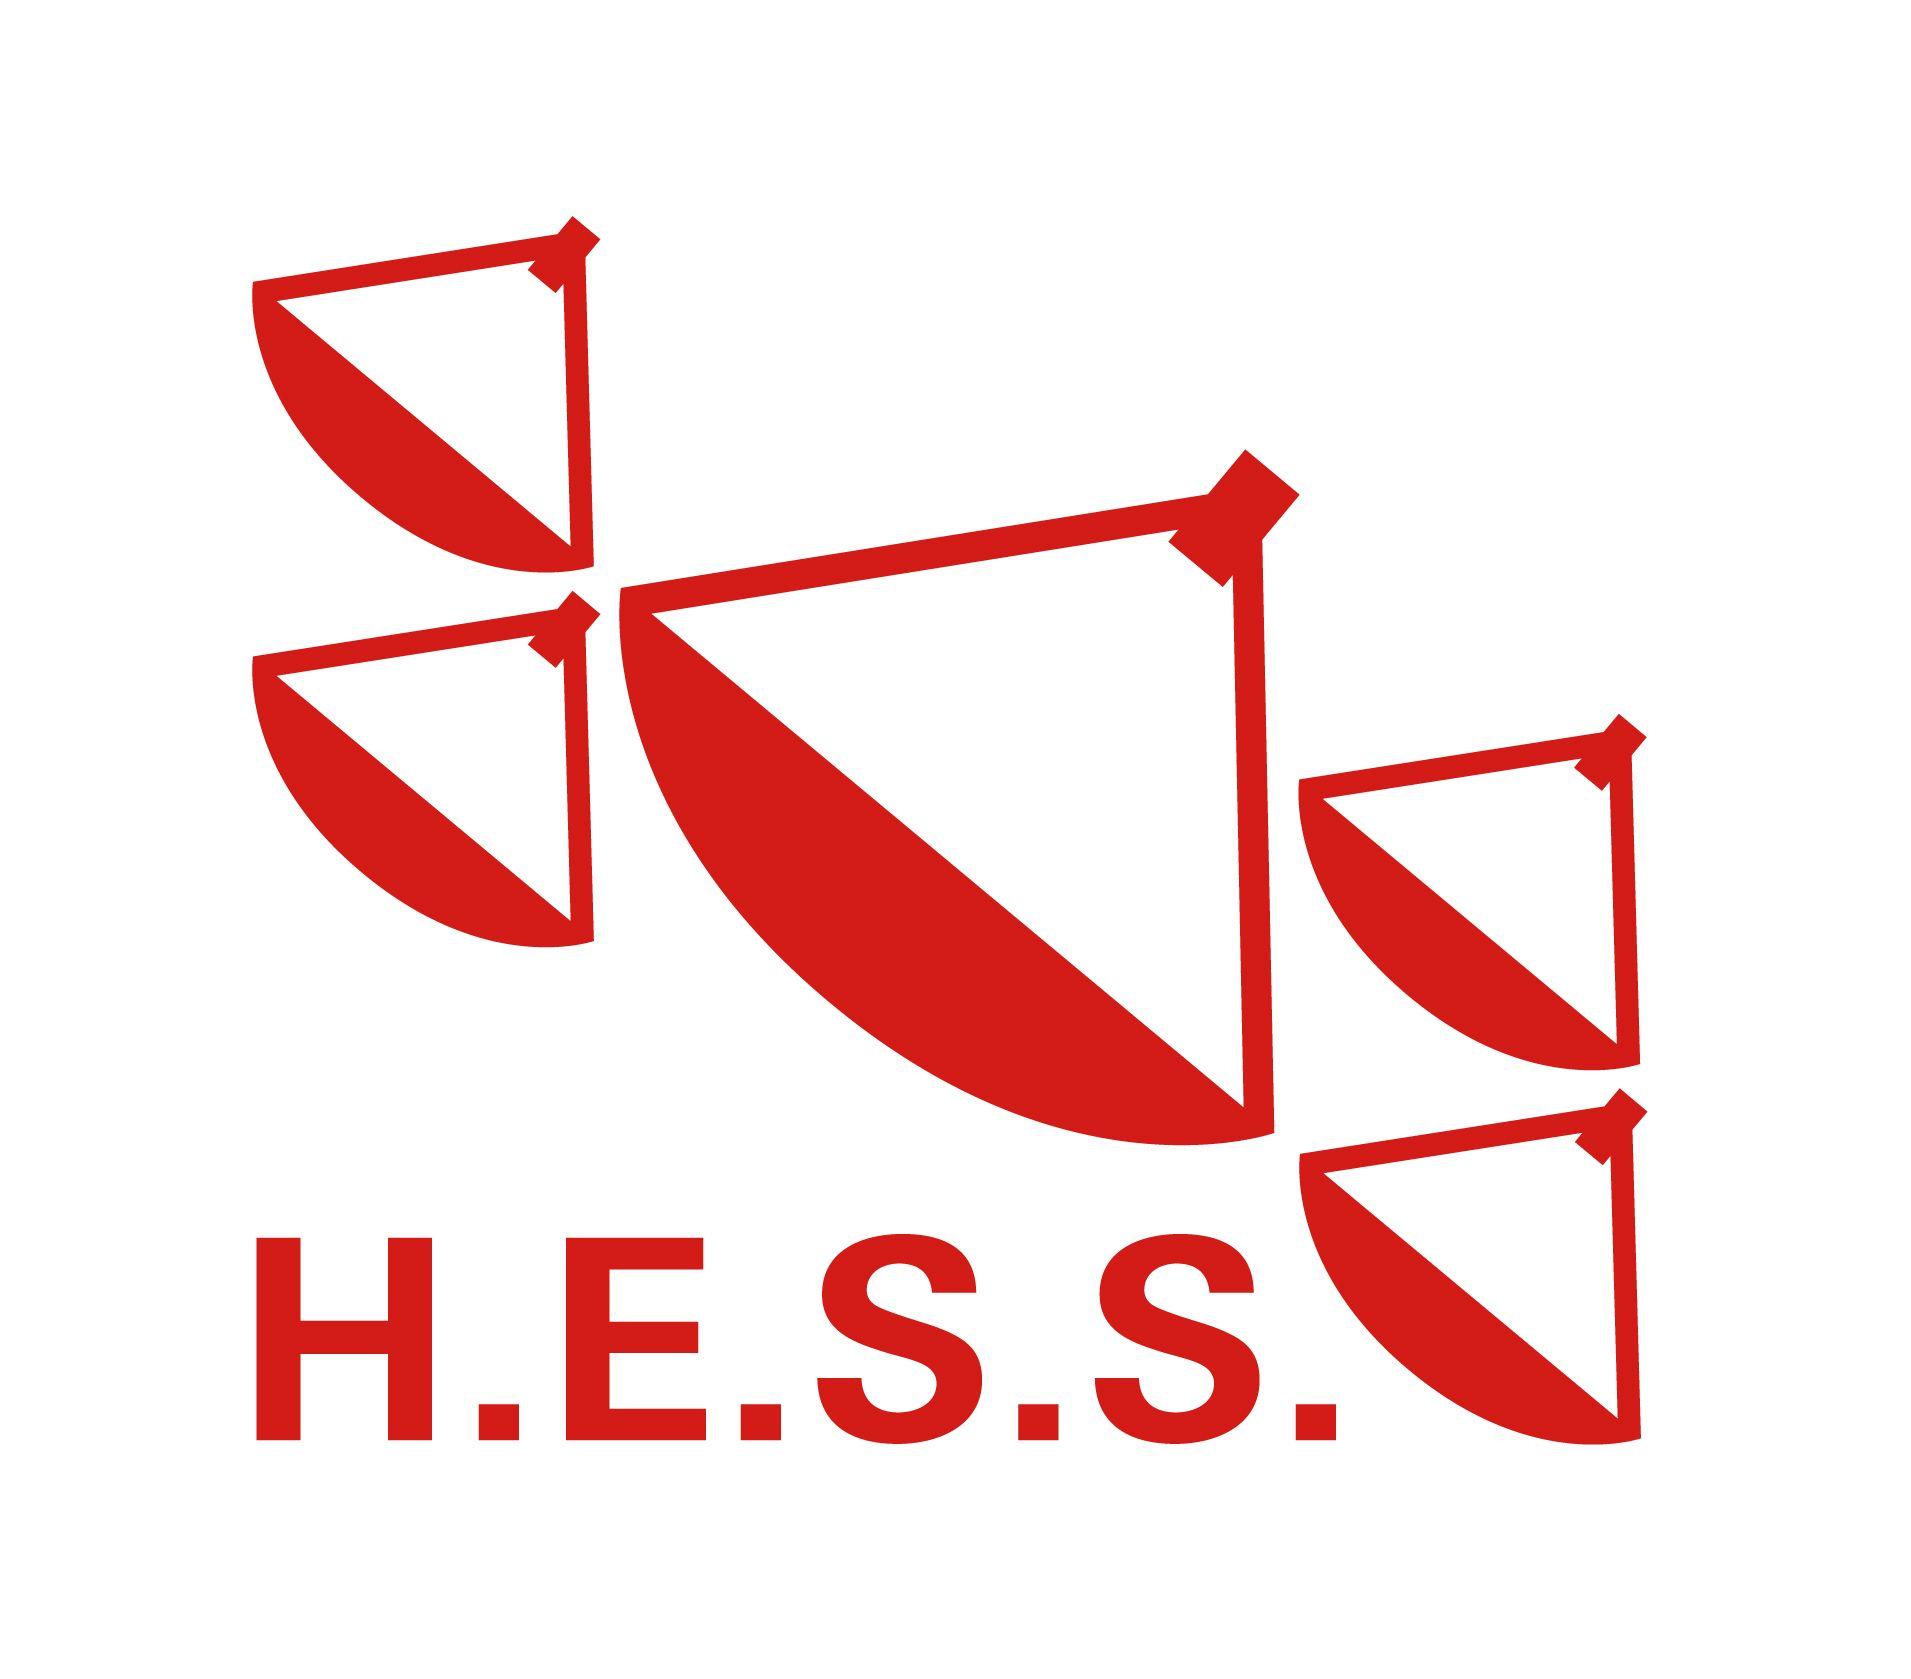 Hess Logo - H.E.S.S. - The High Energy Stereoscopic System